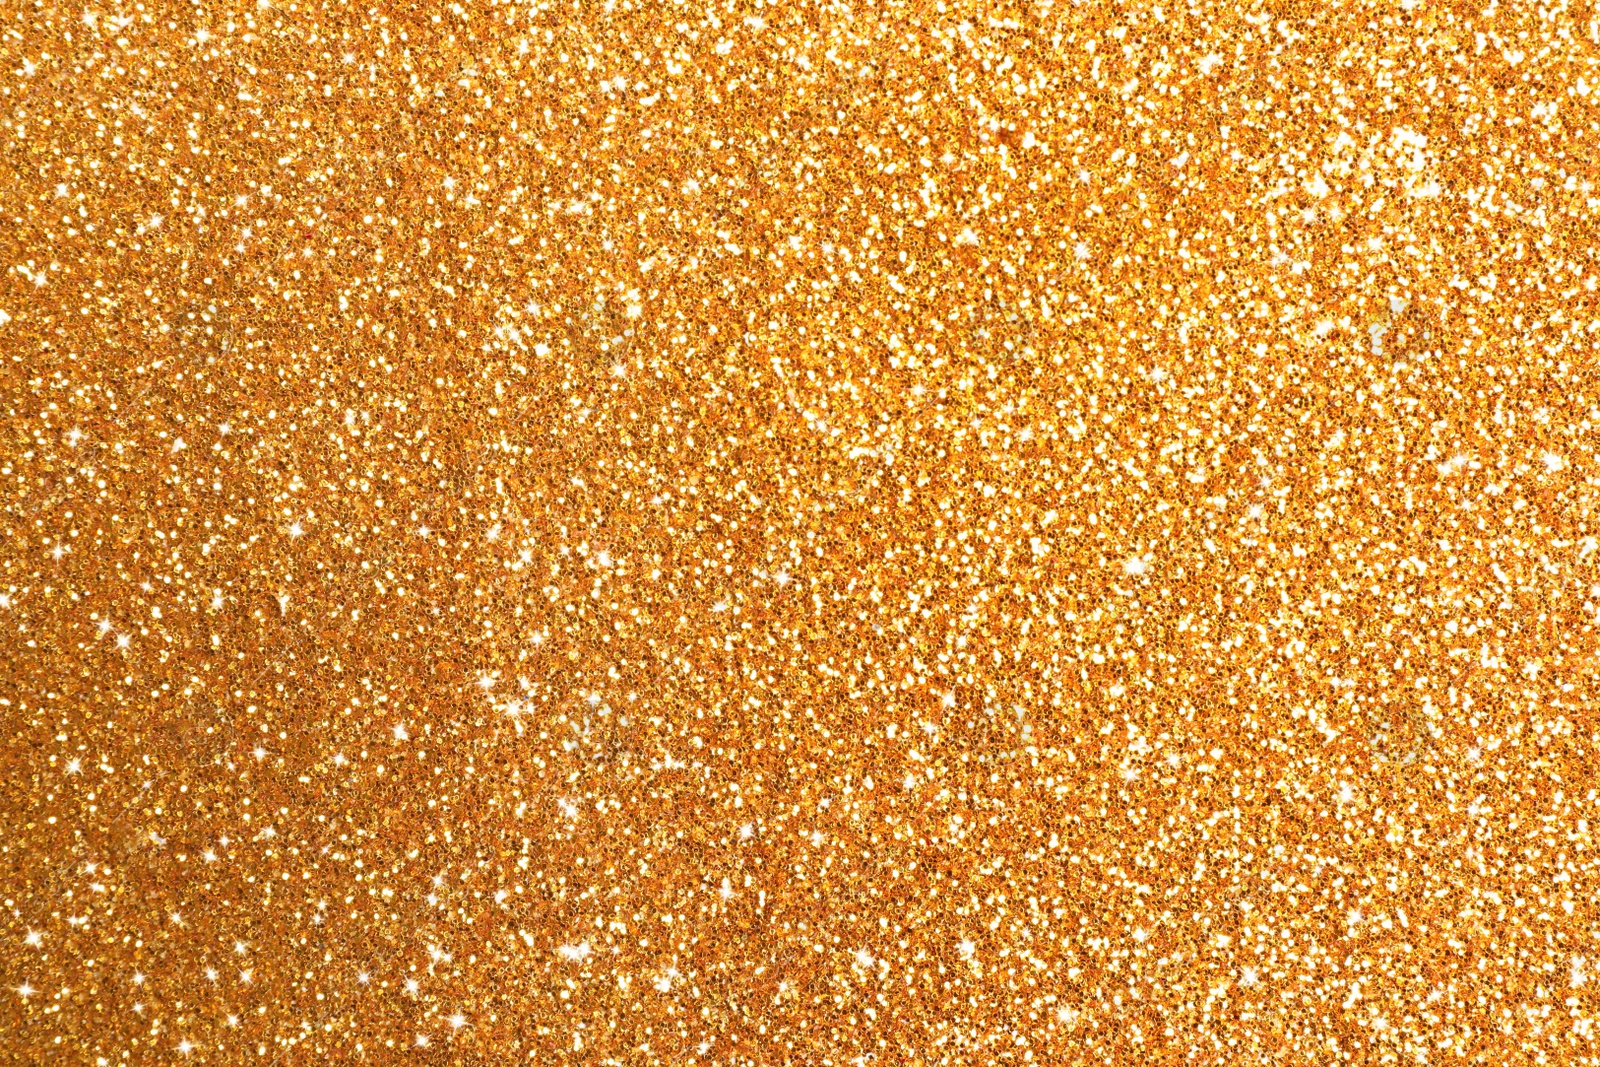 Image of Beautiful shiny golden glitter as background, closeup